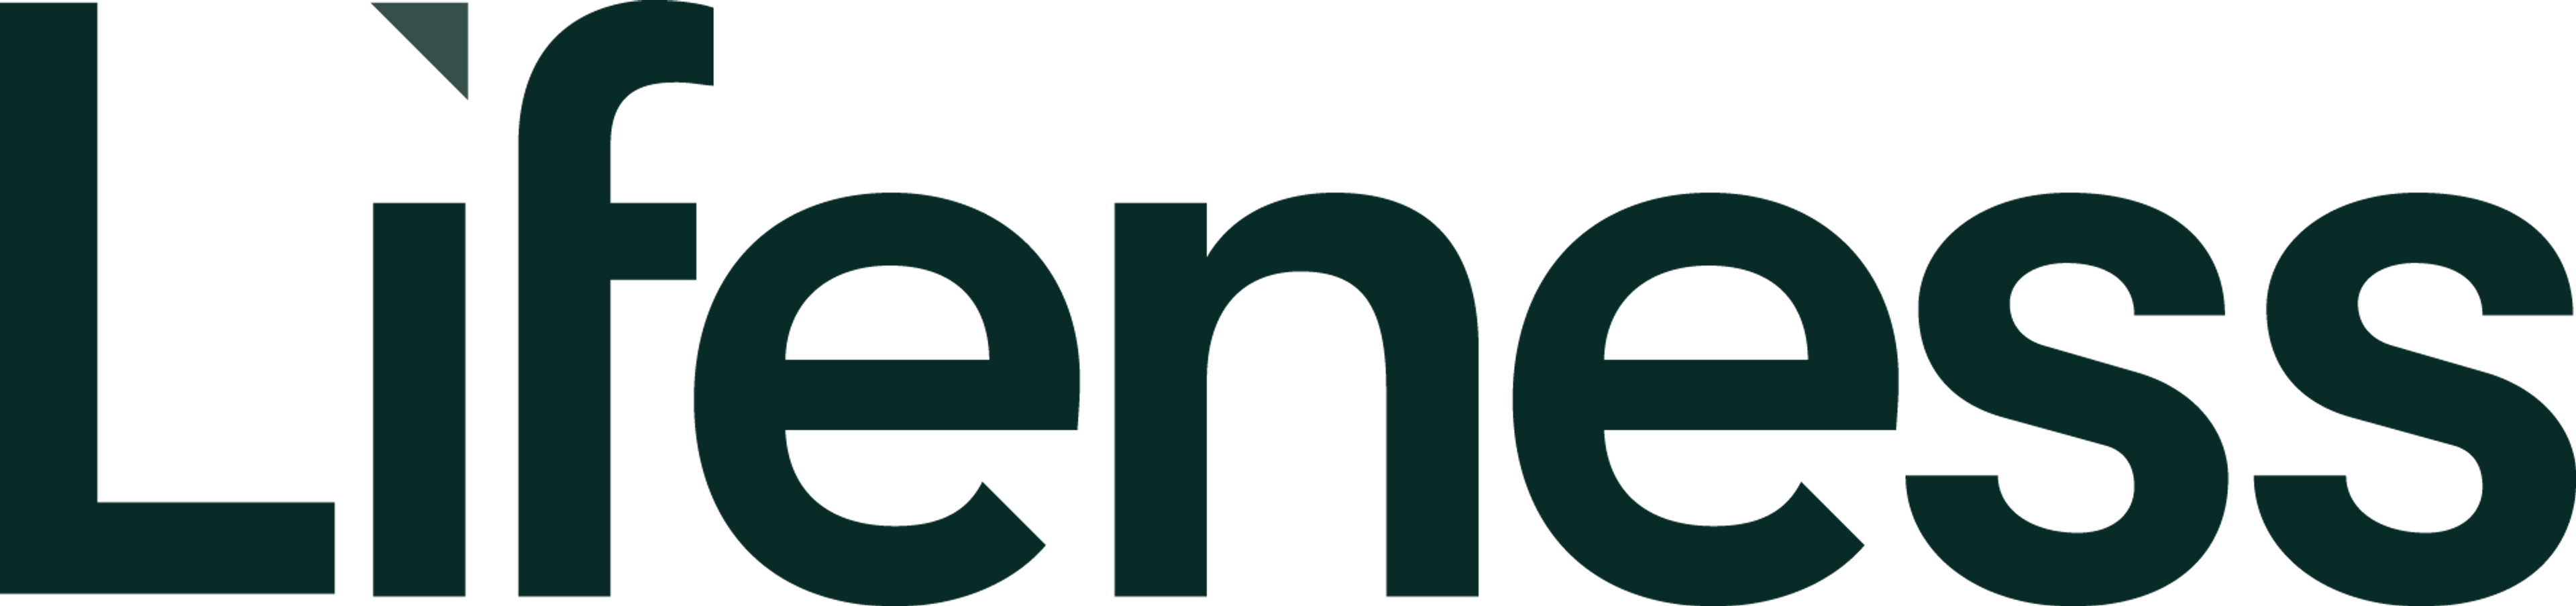 Lifeness logo